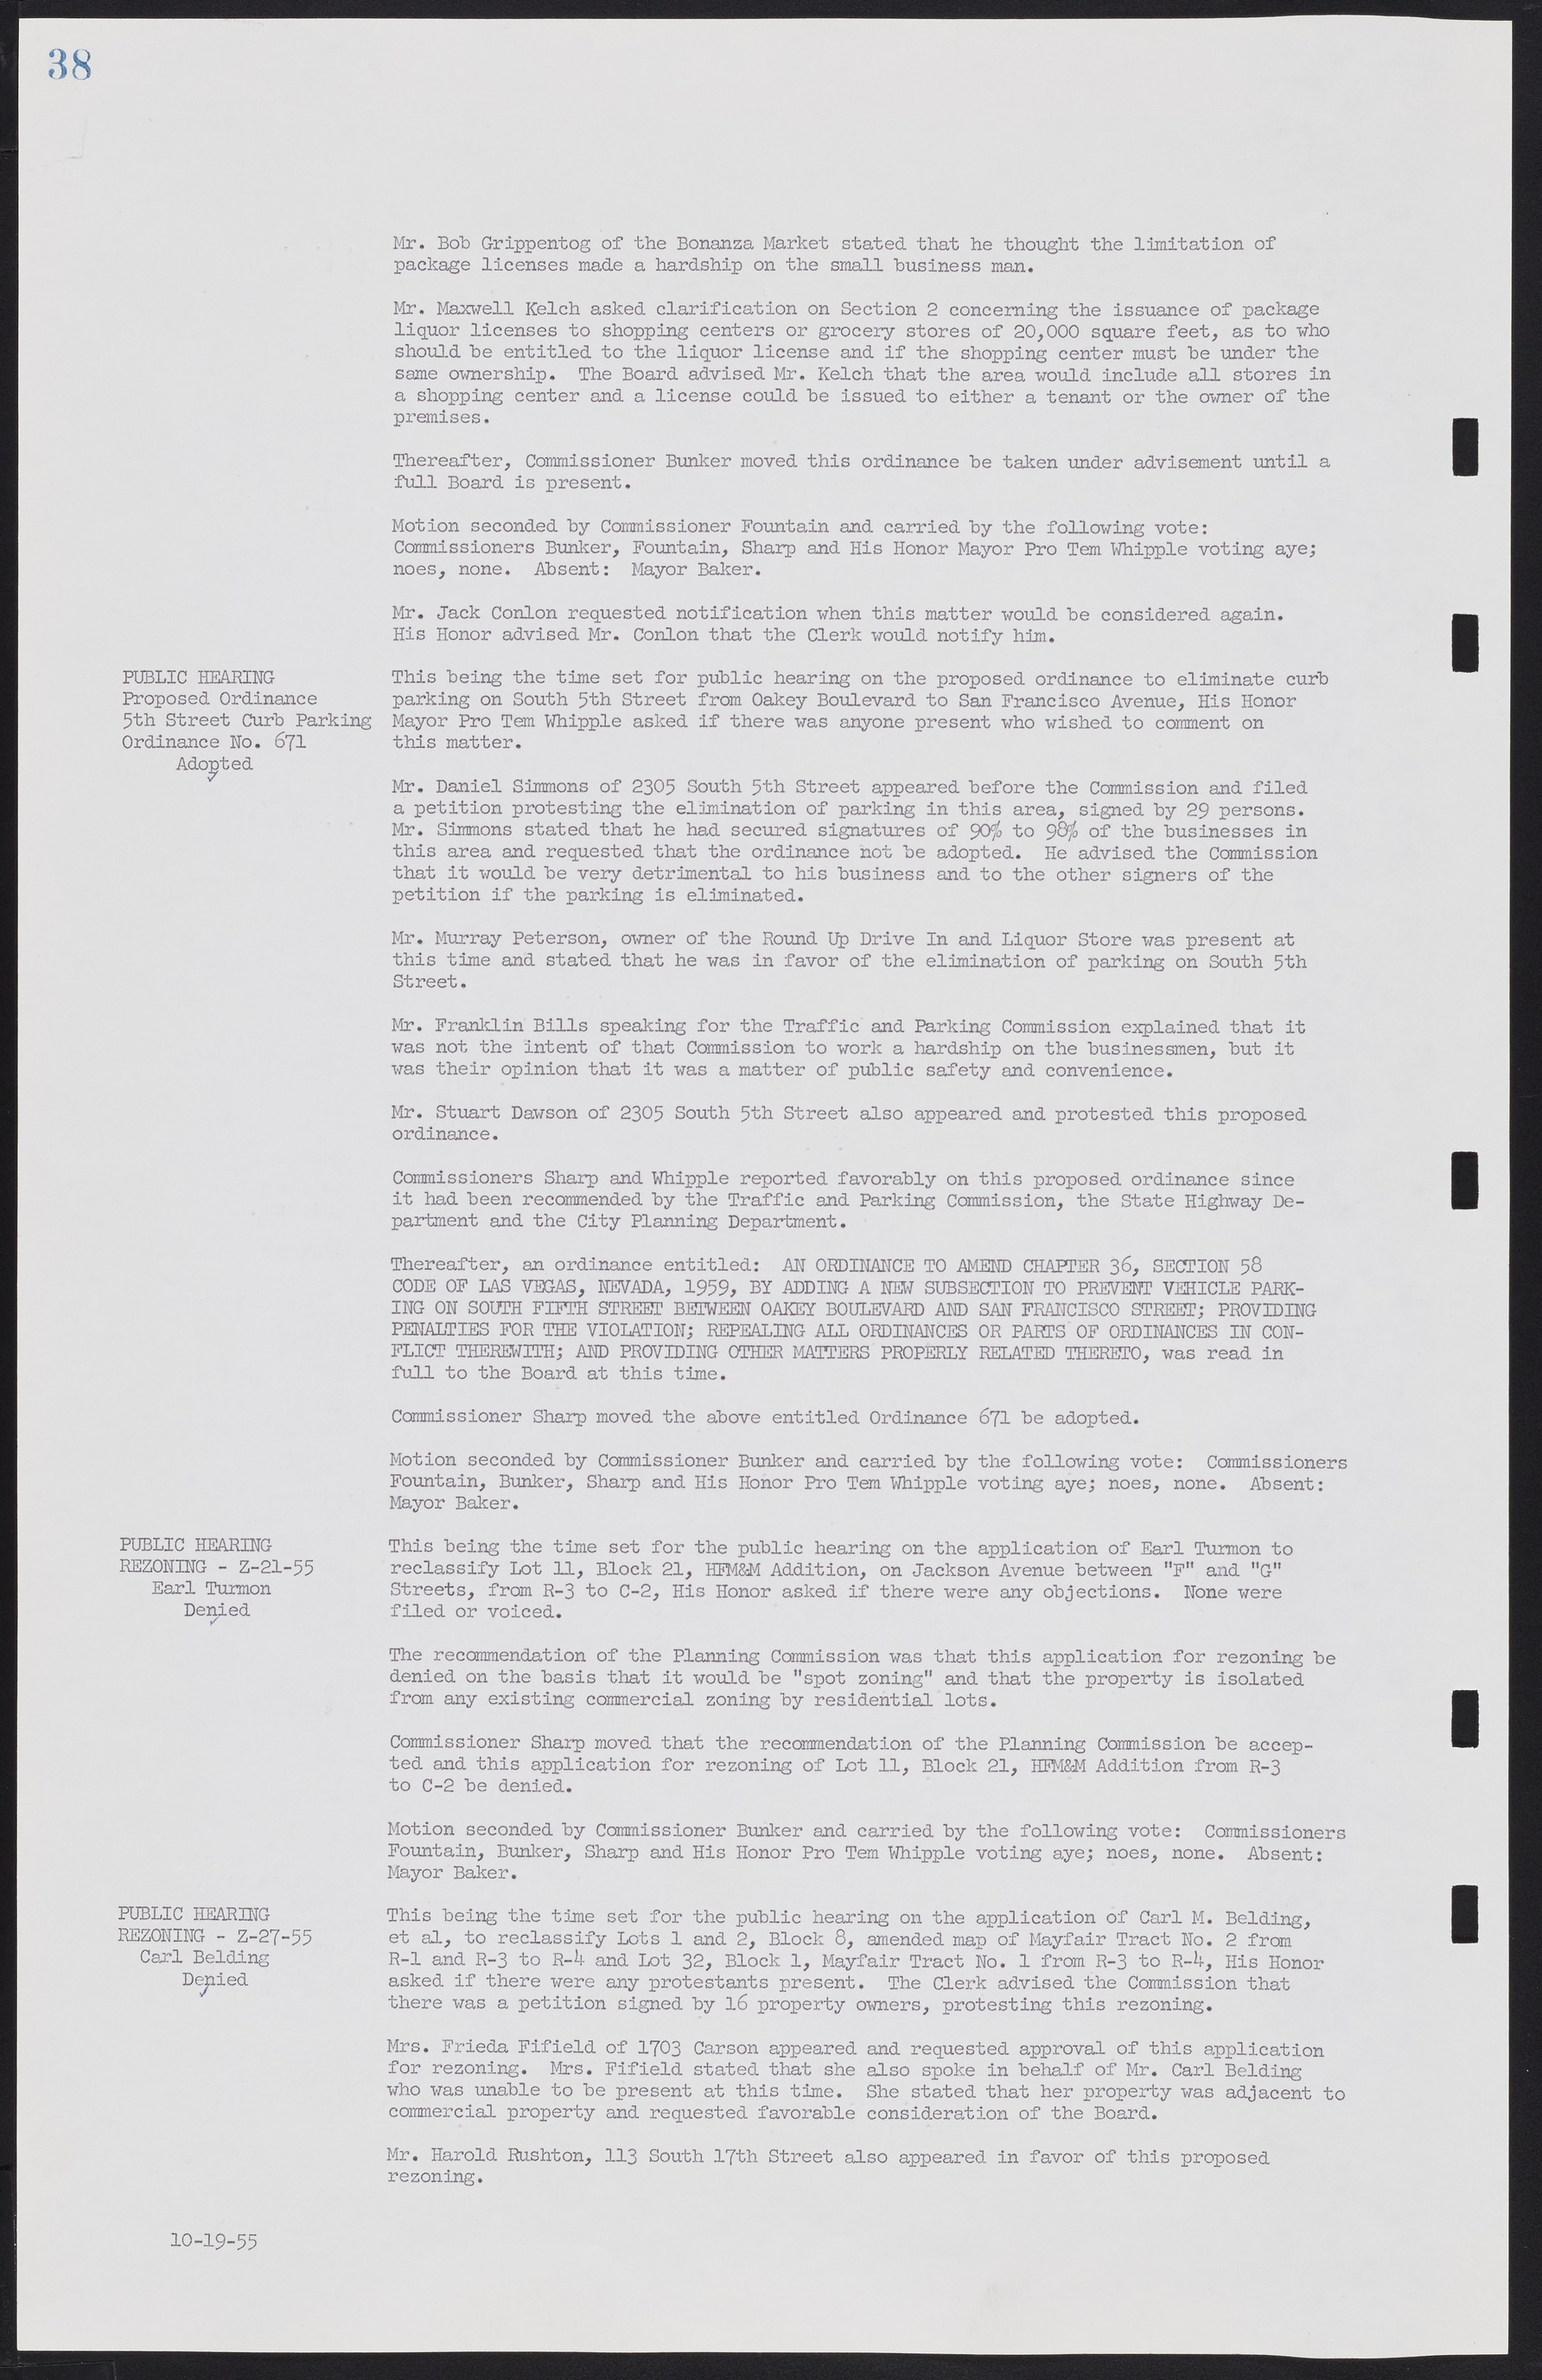 Las Vegas City Commission Minutes, September 21, 1955 to November 20, 1957, lvc000010-44